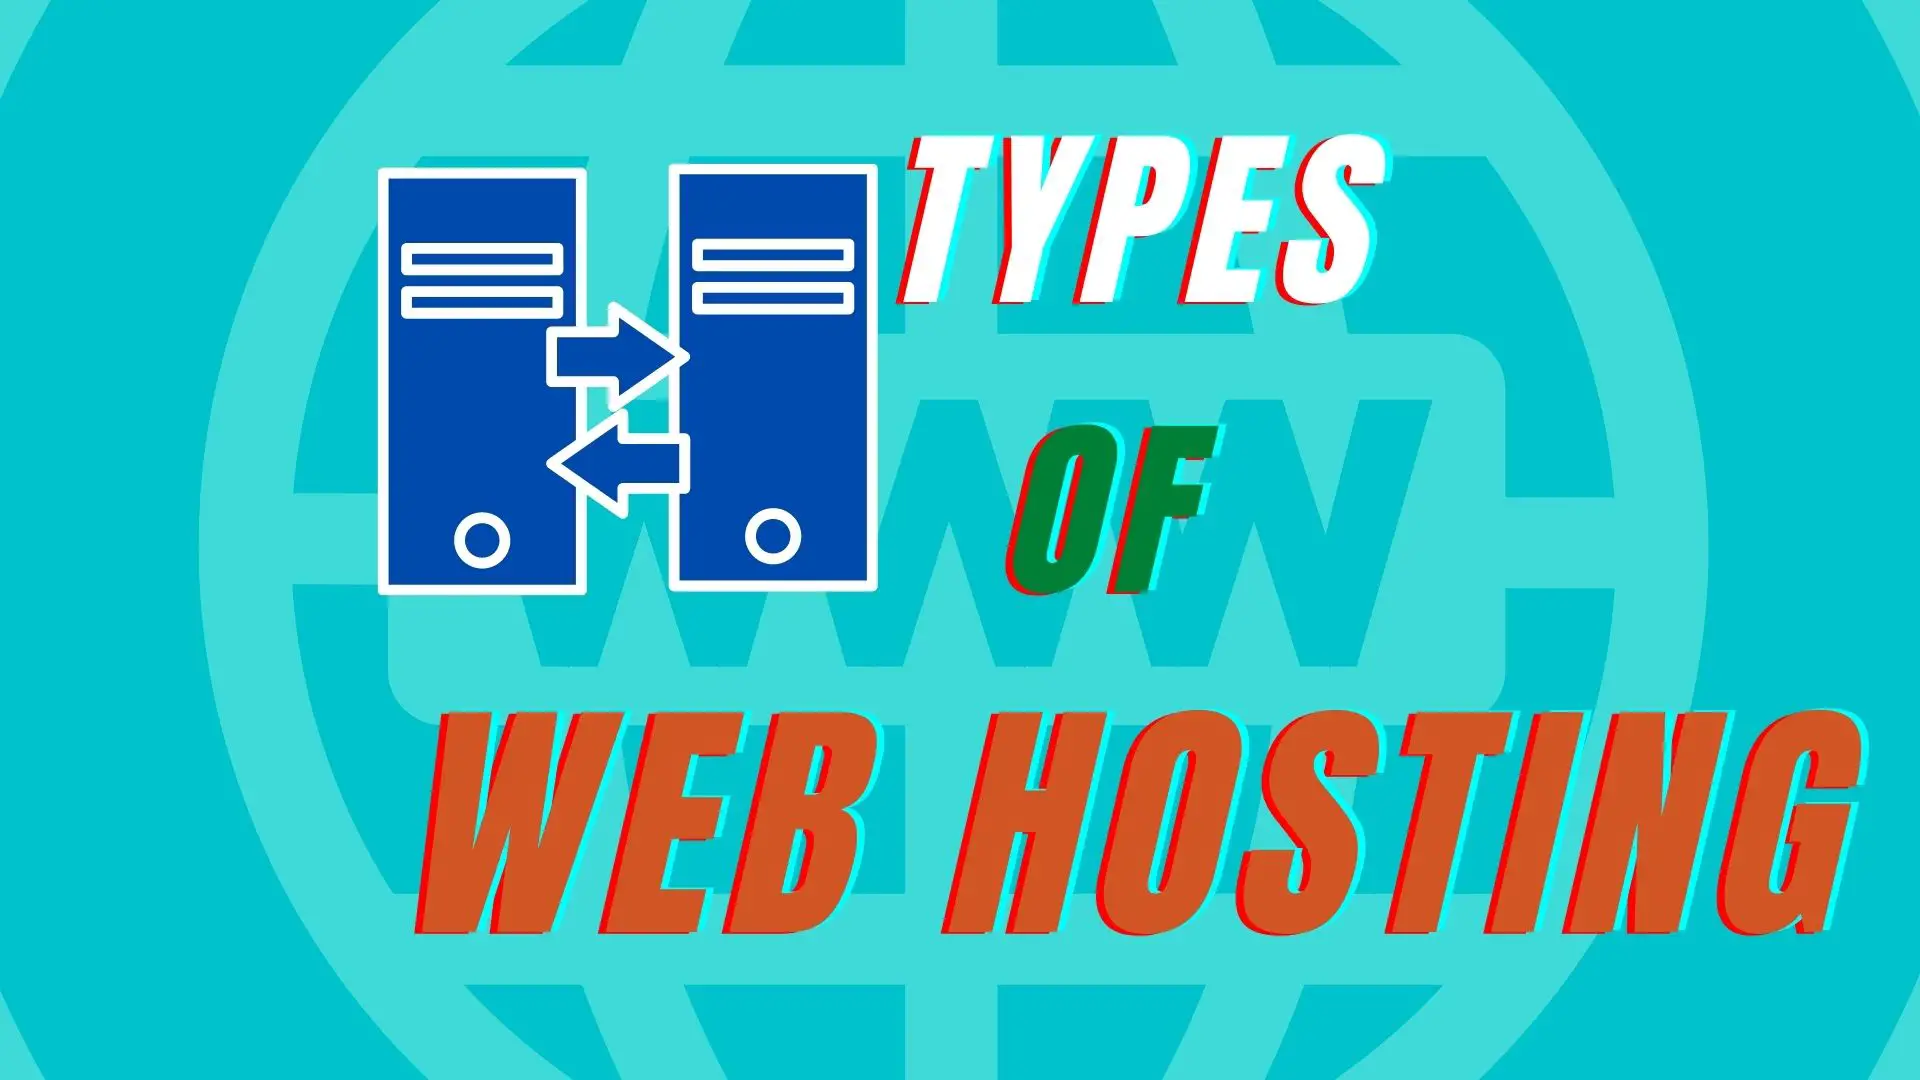 Web Hosting -Types of Web Hosting